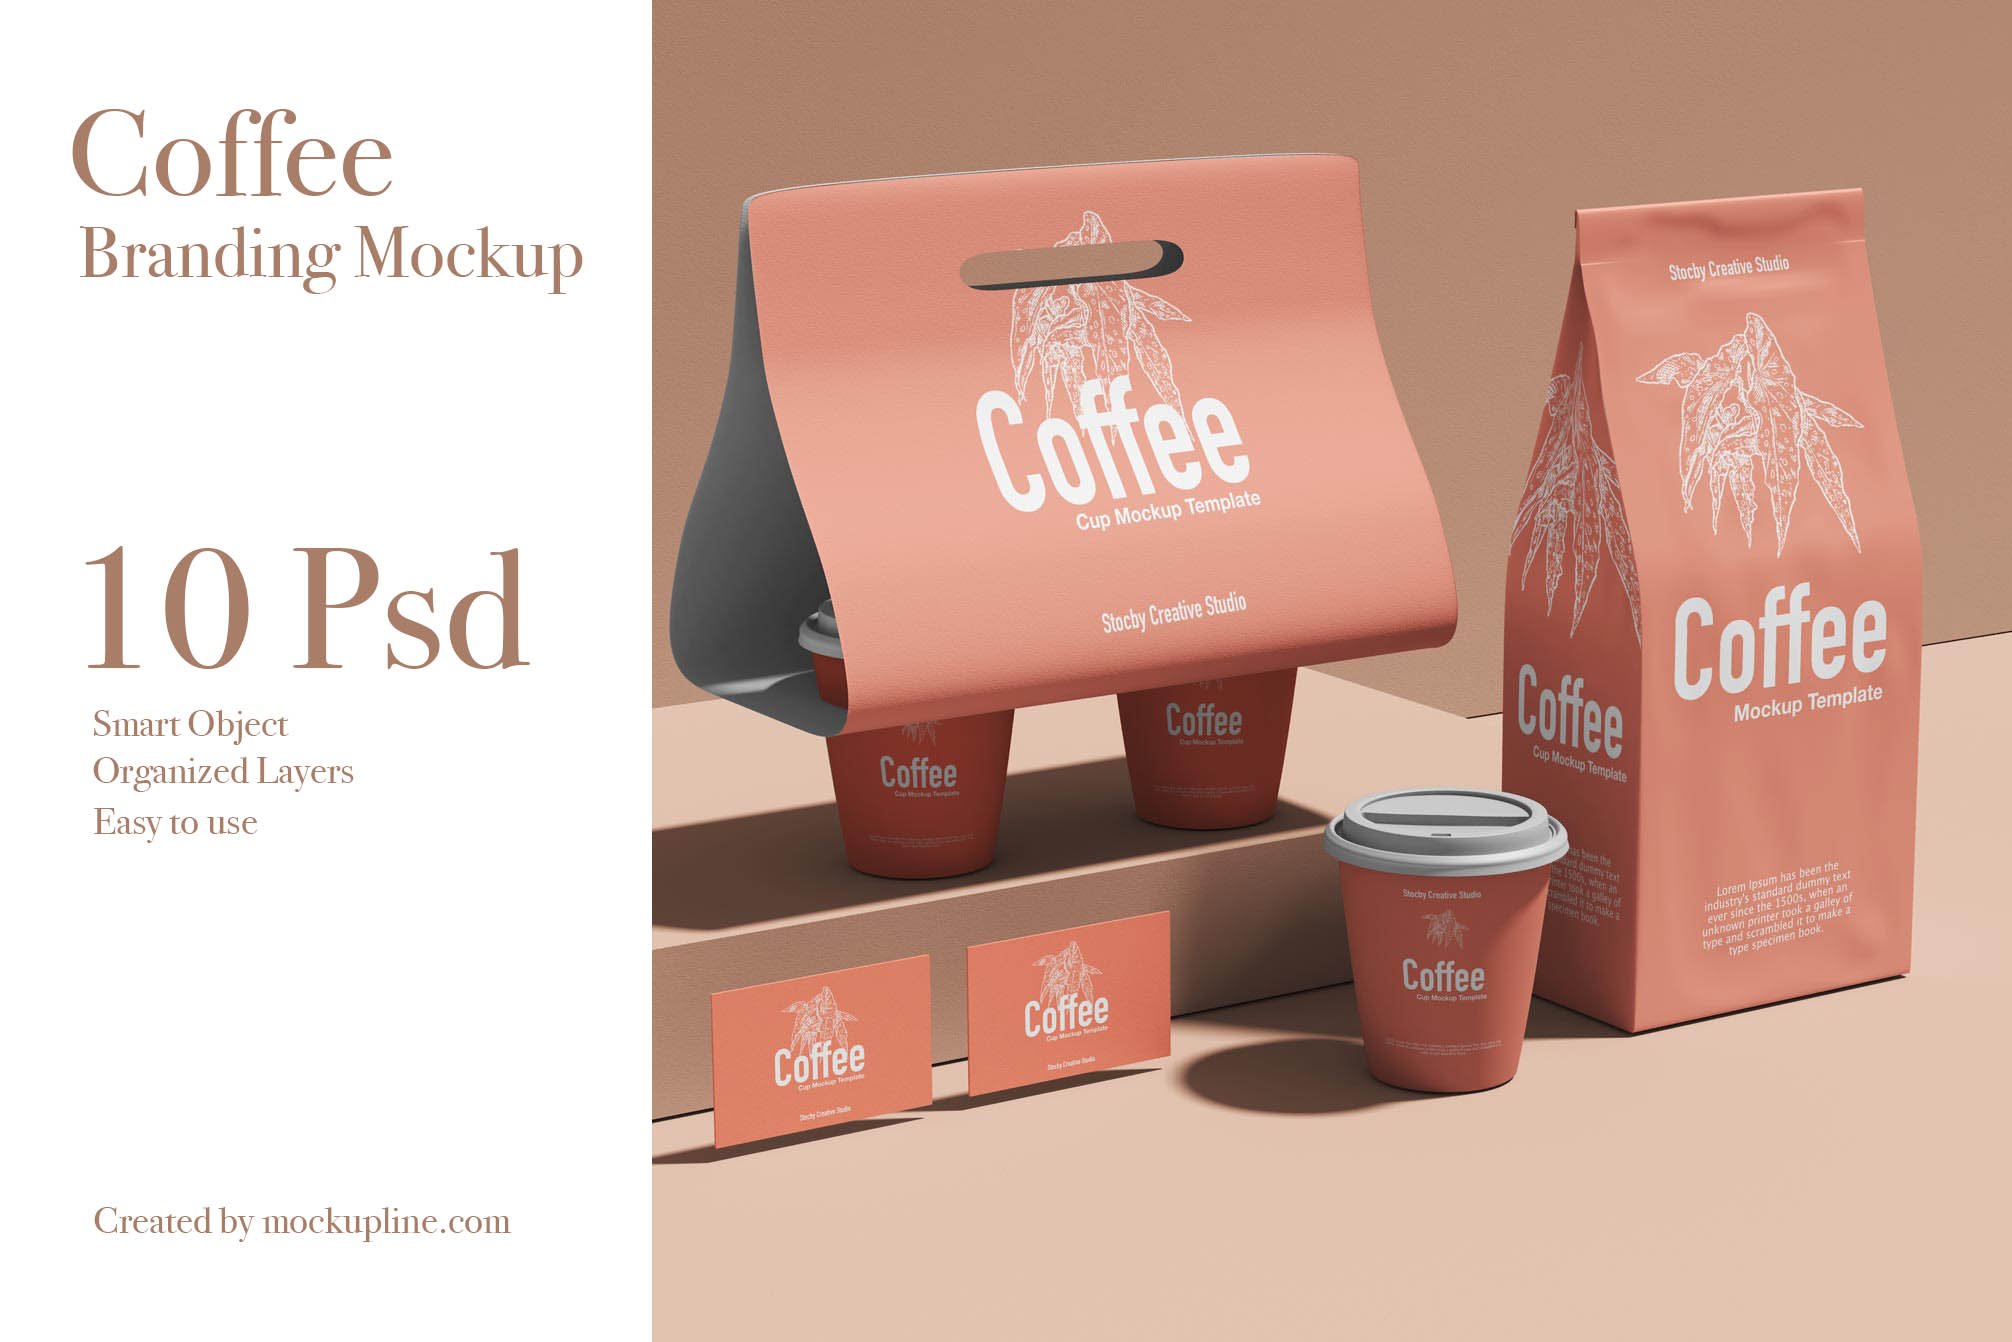 Coffee Branding Mockup Set cover image.